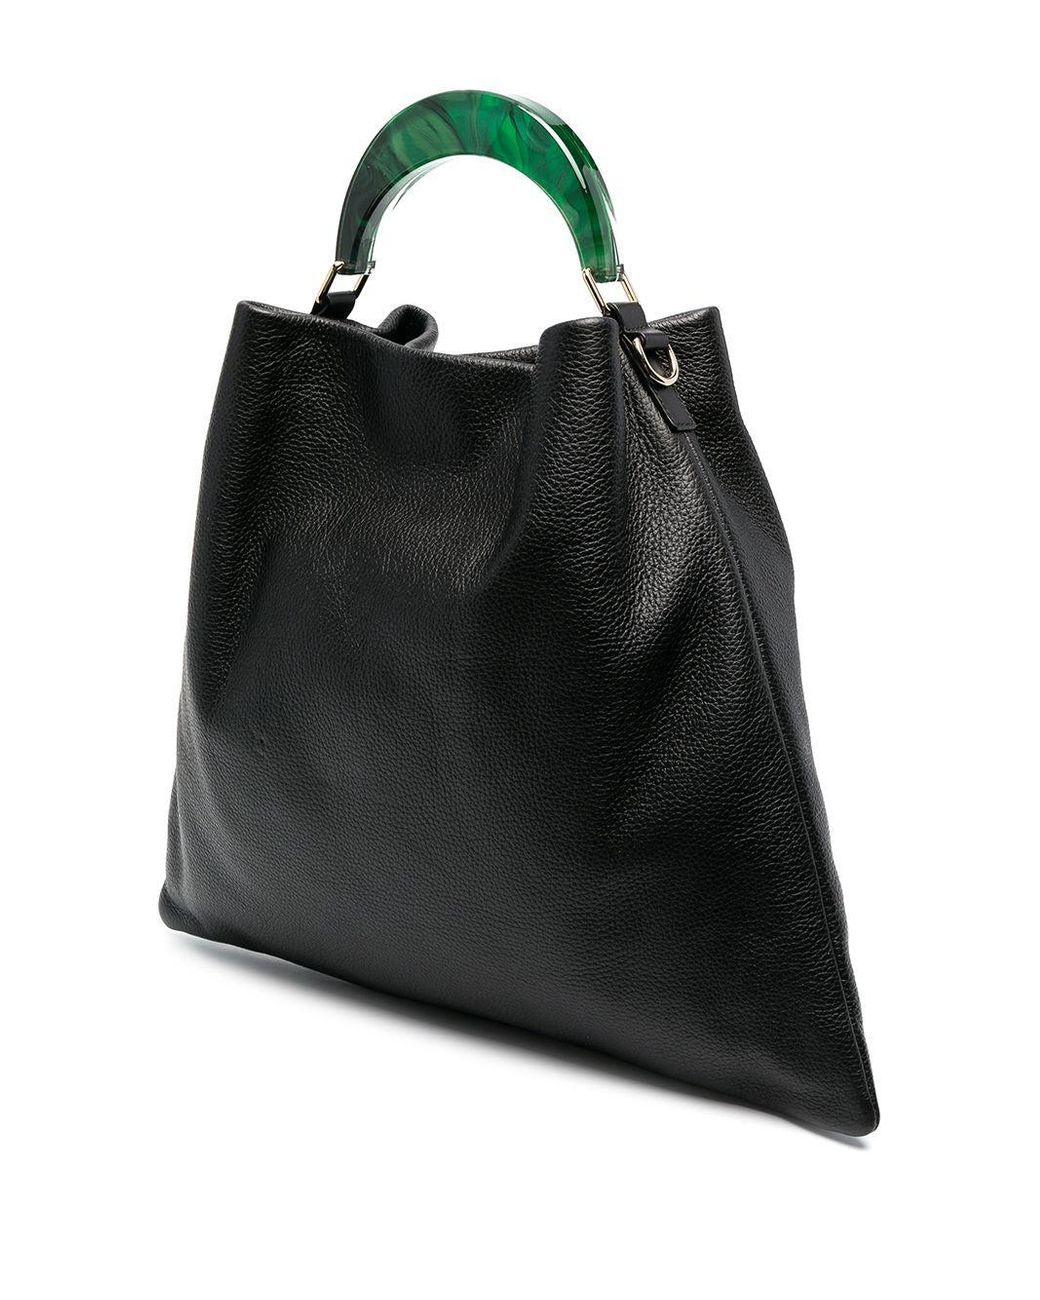 Marni Leather Borsa Sacca Bags in Black | Lyst